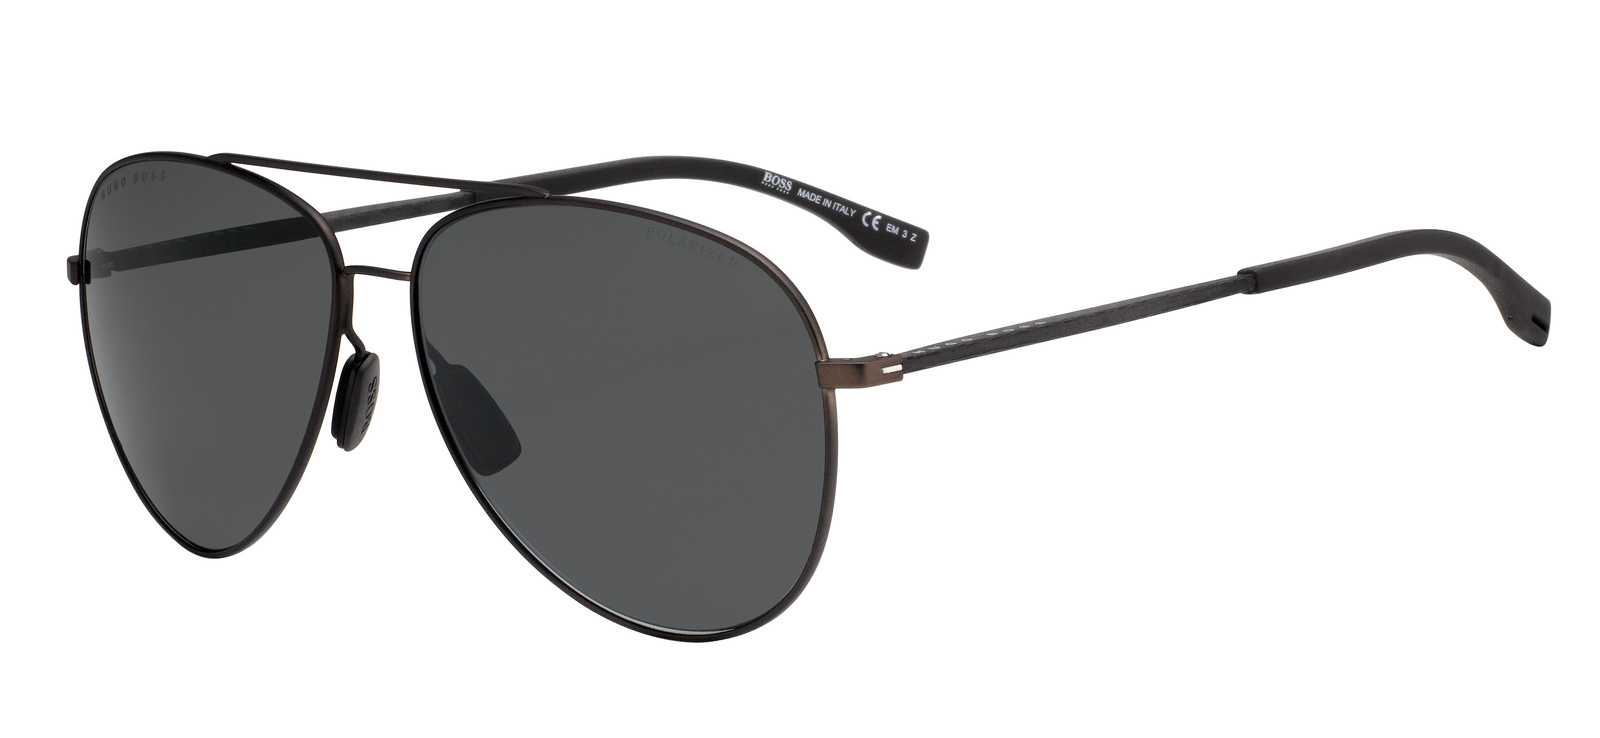 Hugo Boss Sunglasses 0868/S 0N2 NR Matt Black Dark Ruthenium Brown Grey